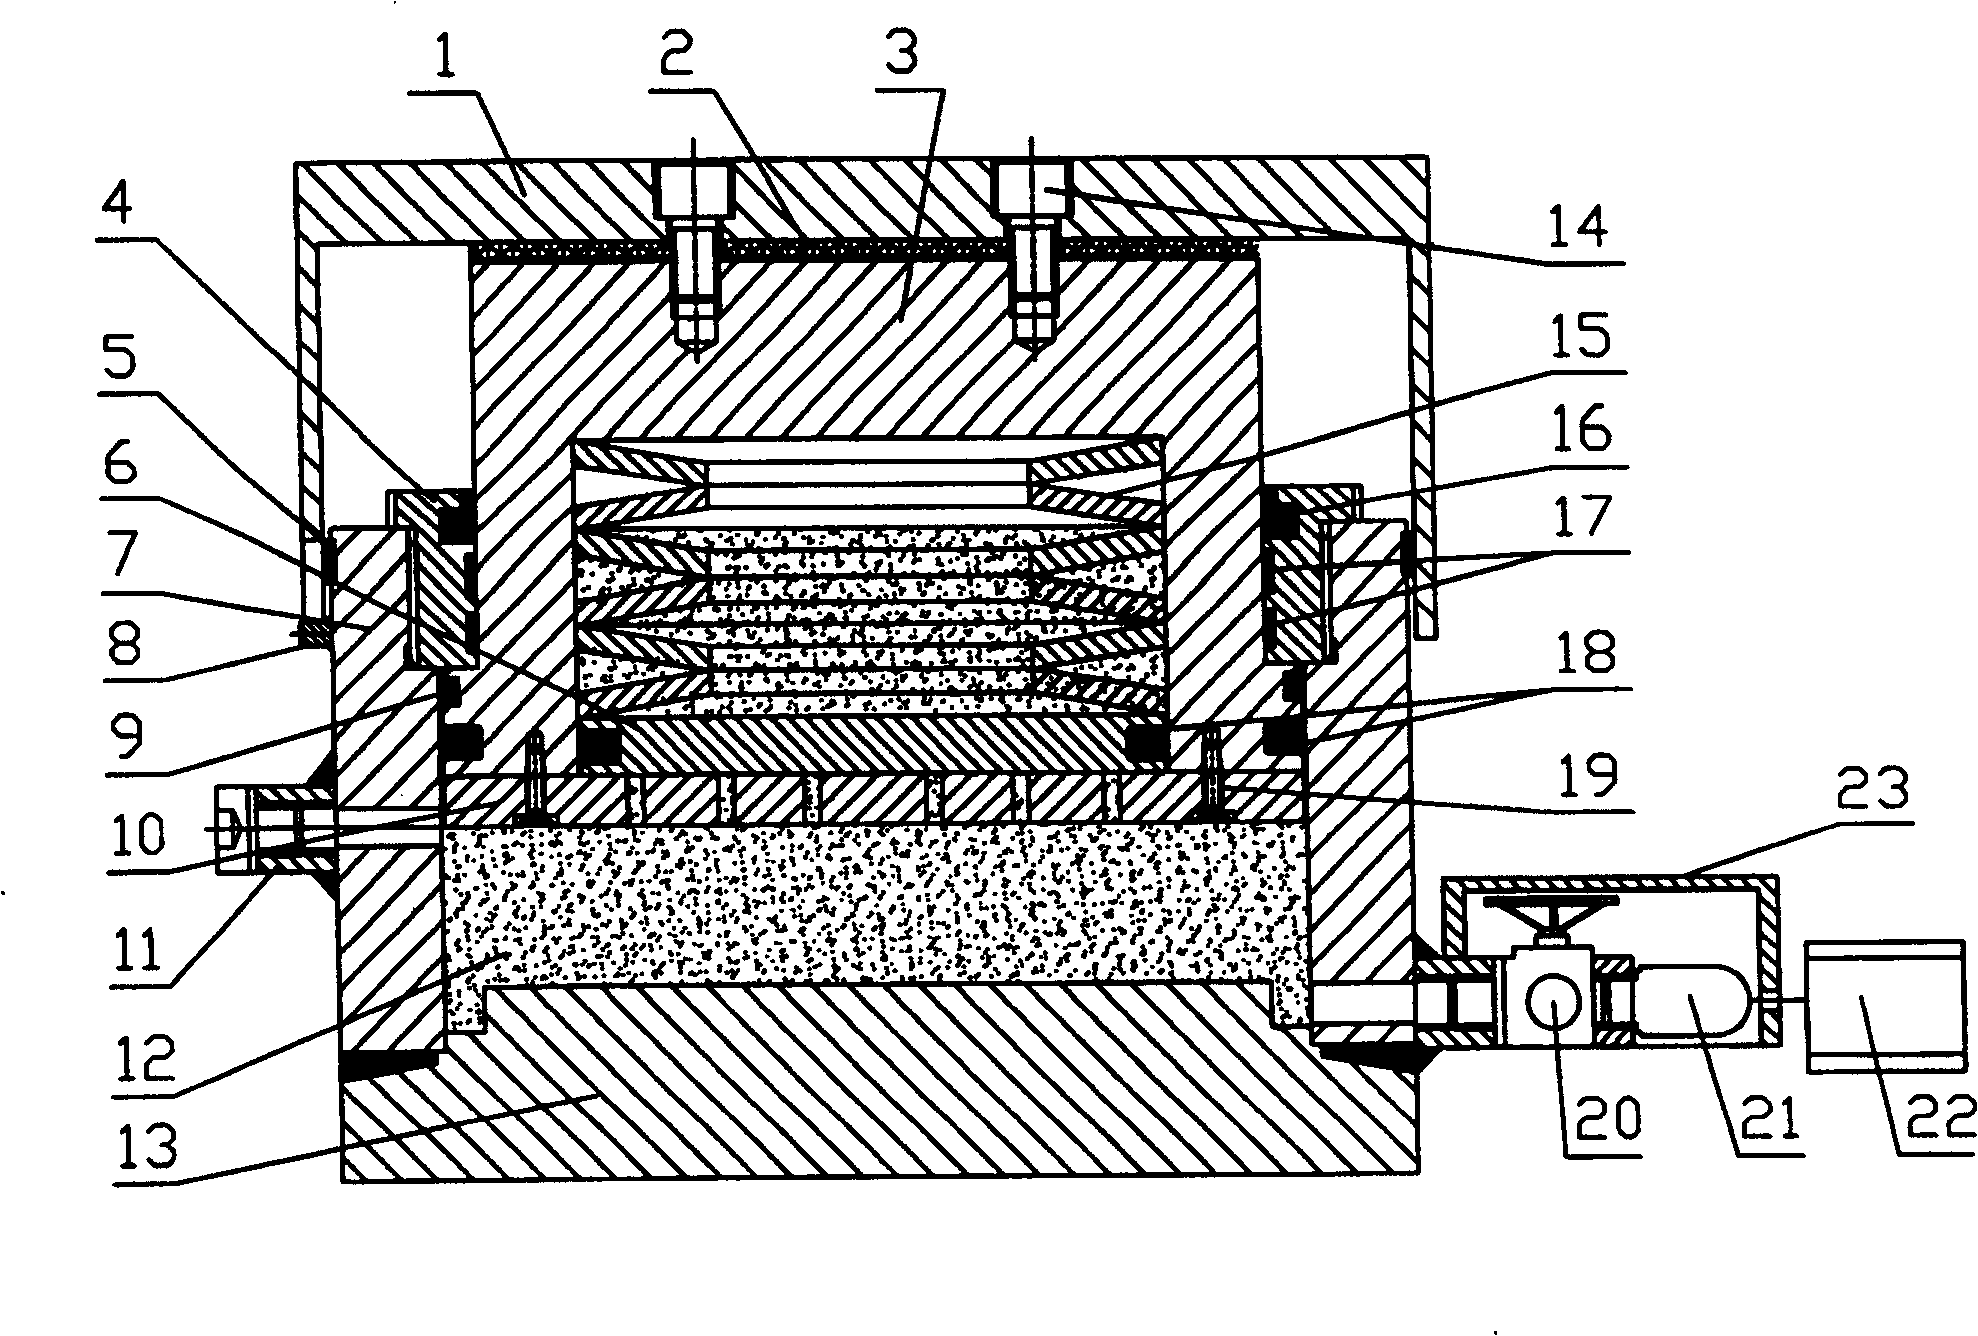 Buffer type hydraulic weighing device